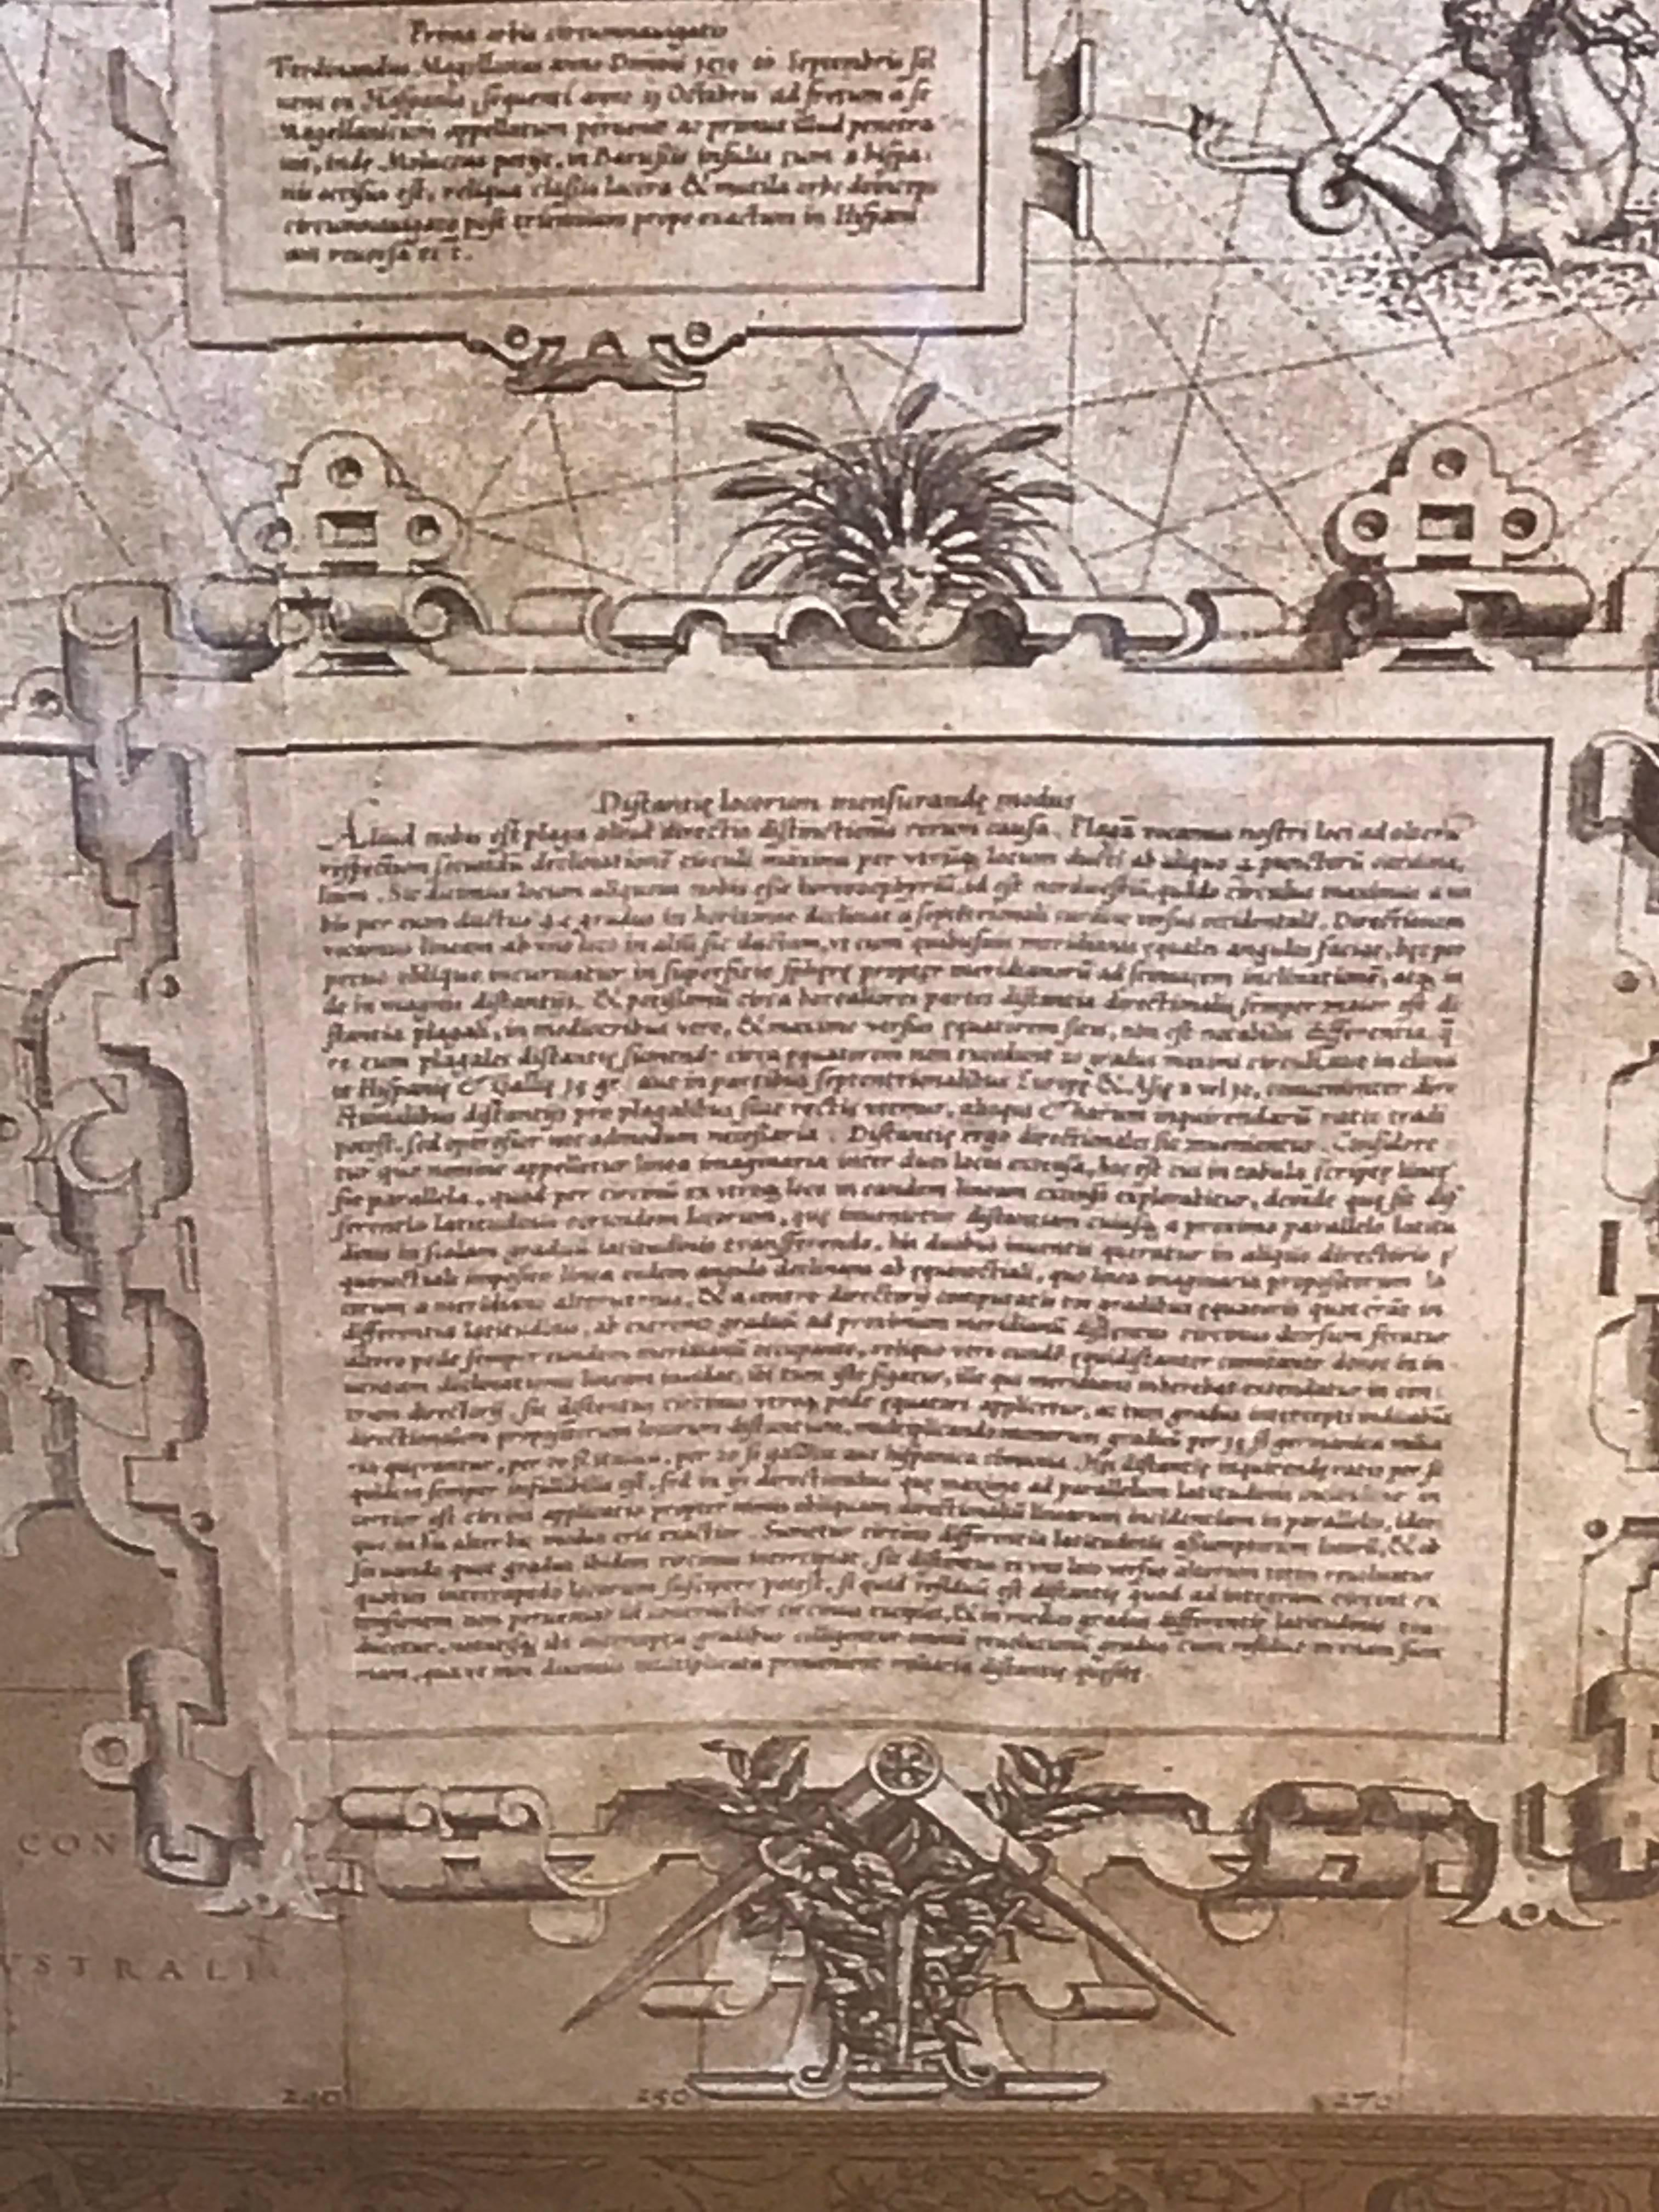 1569 mercator map